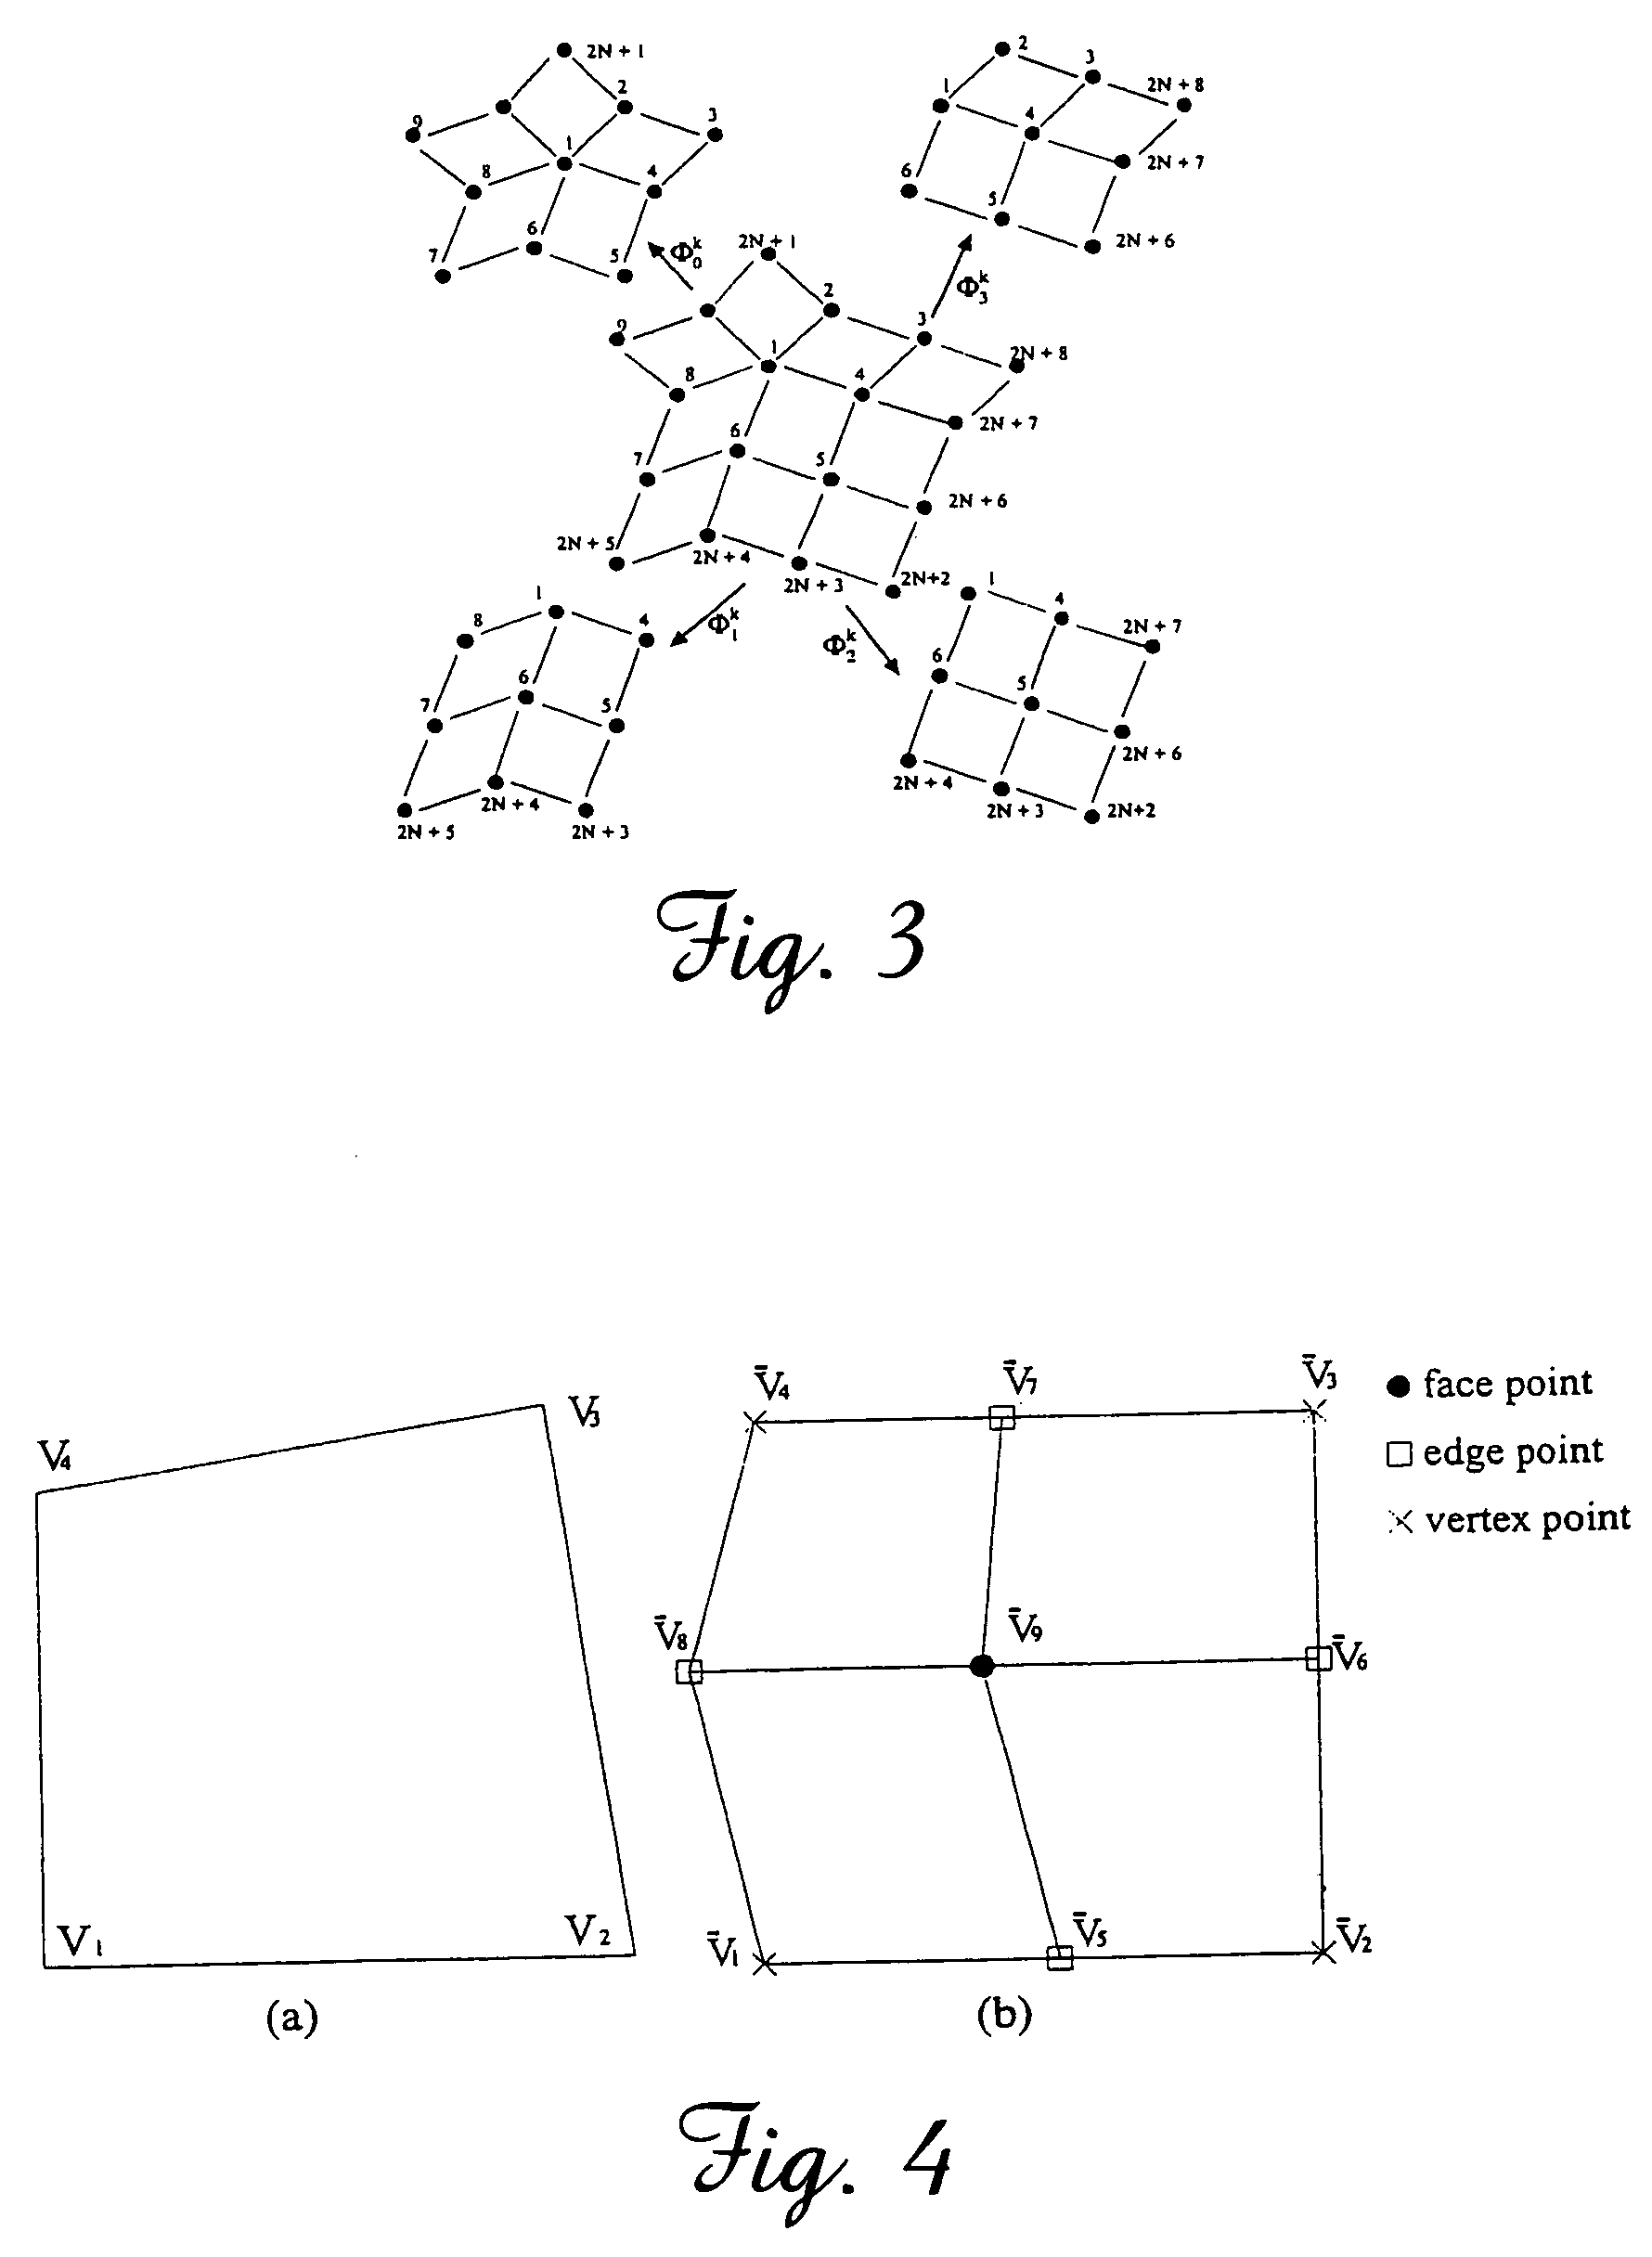 Subdivision surface-based geometric modeling system